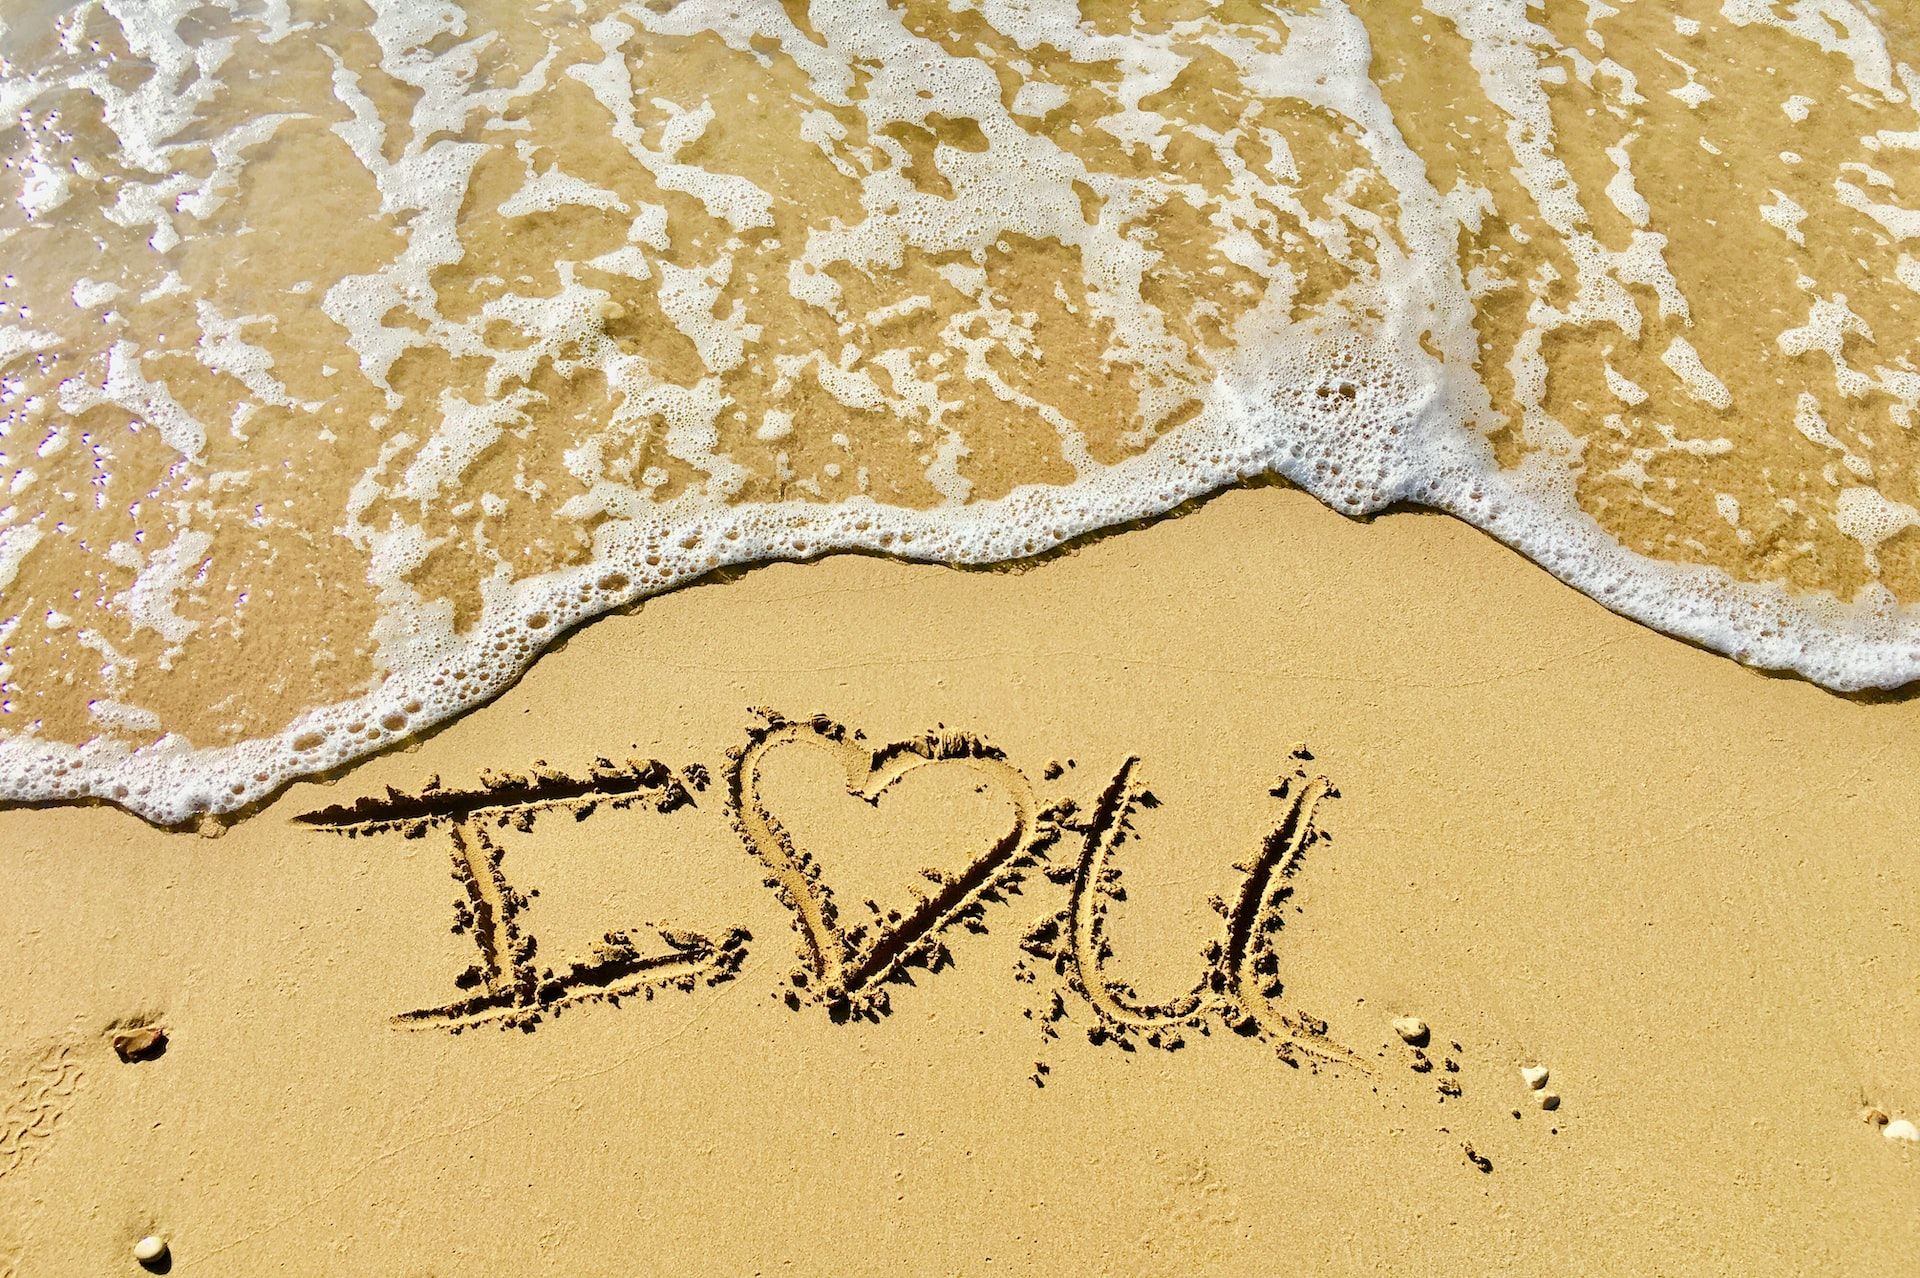 I Heart You written in sand